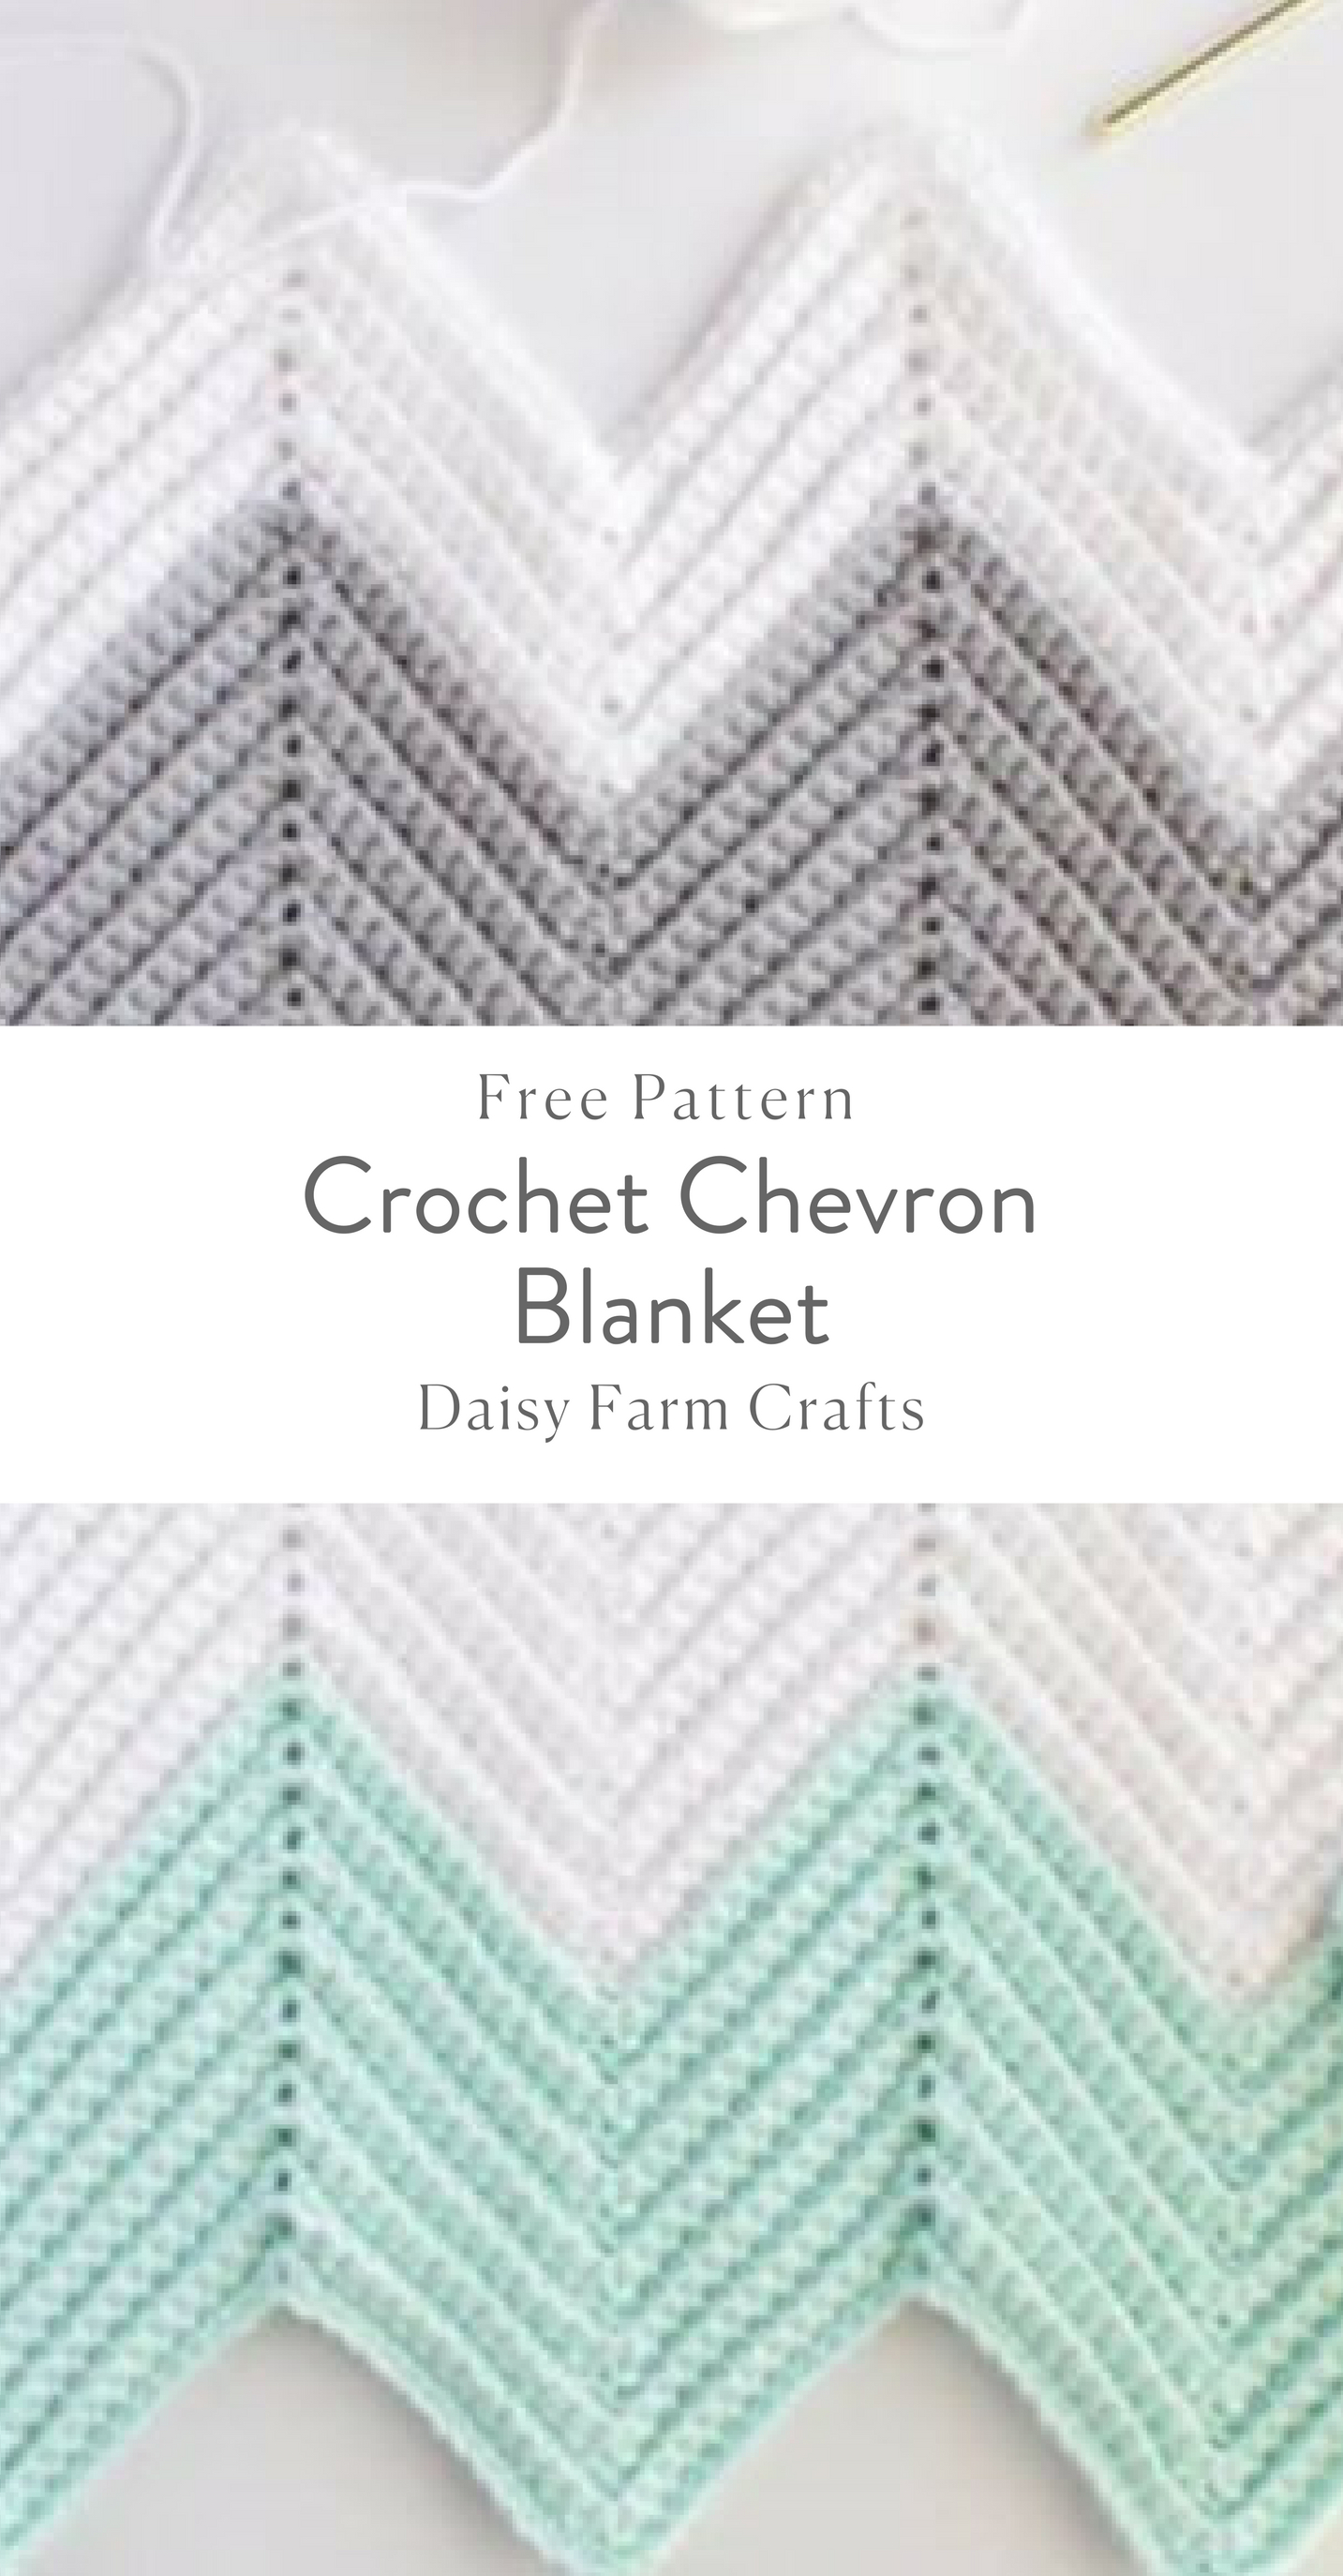 Crochet Chevron Pattern Free Pattern Crochet Chevron Blanket Daisy Farm Crafts Crochet